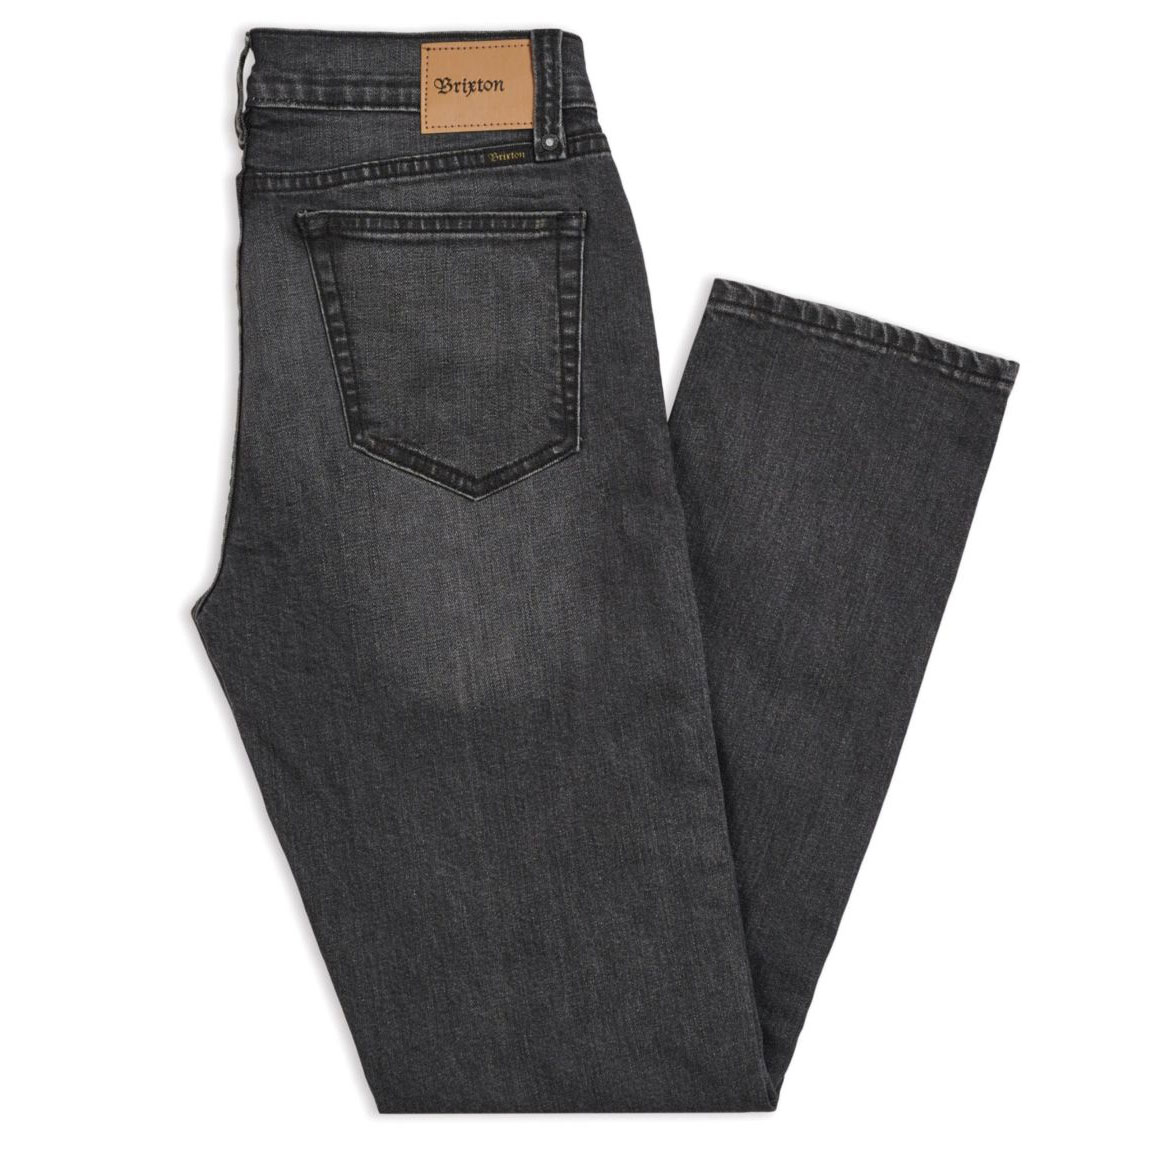 Brixton Jeanshose Reserve 5-Pocket Denim Pant (worn black)